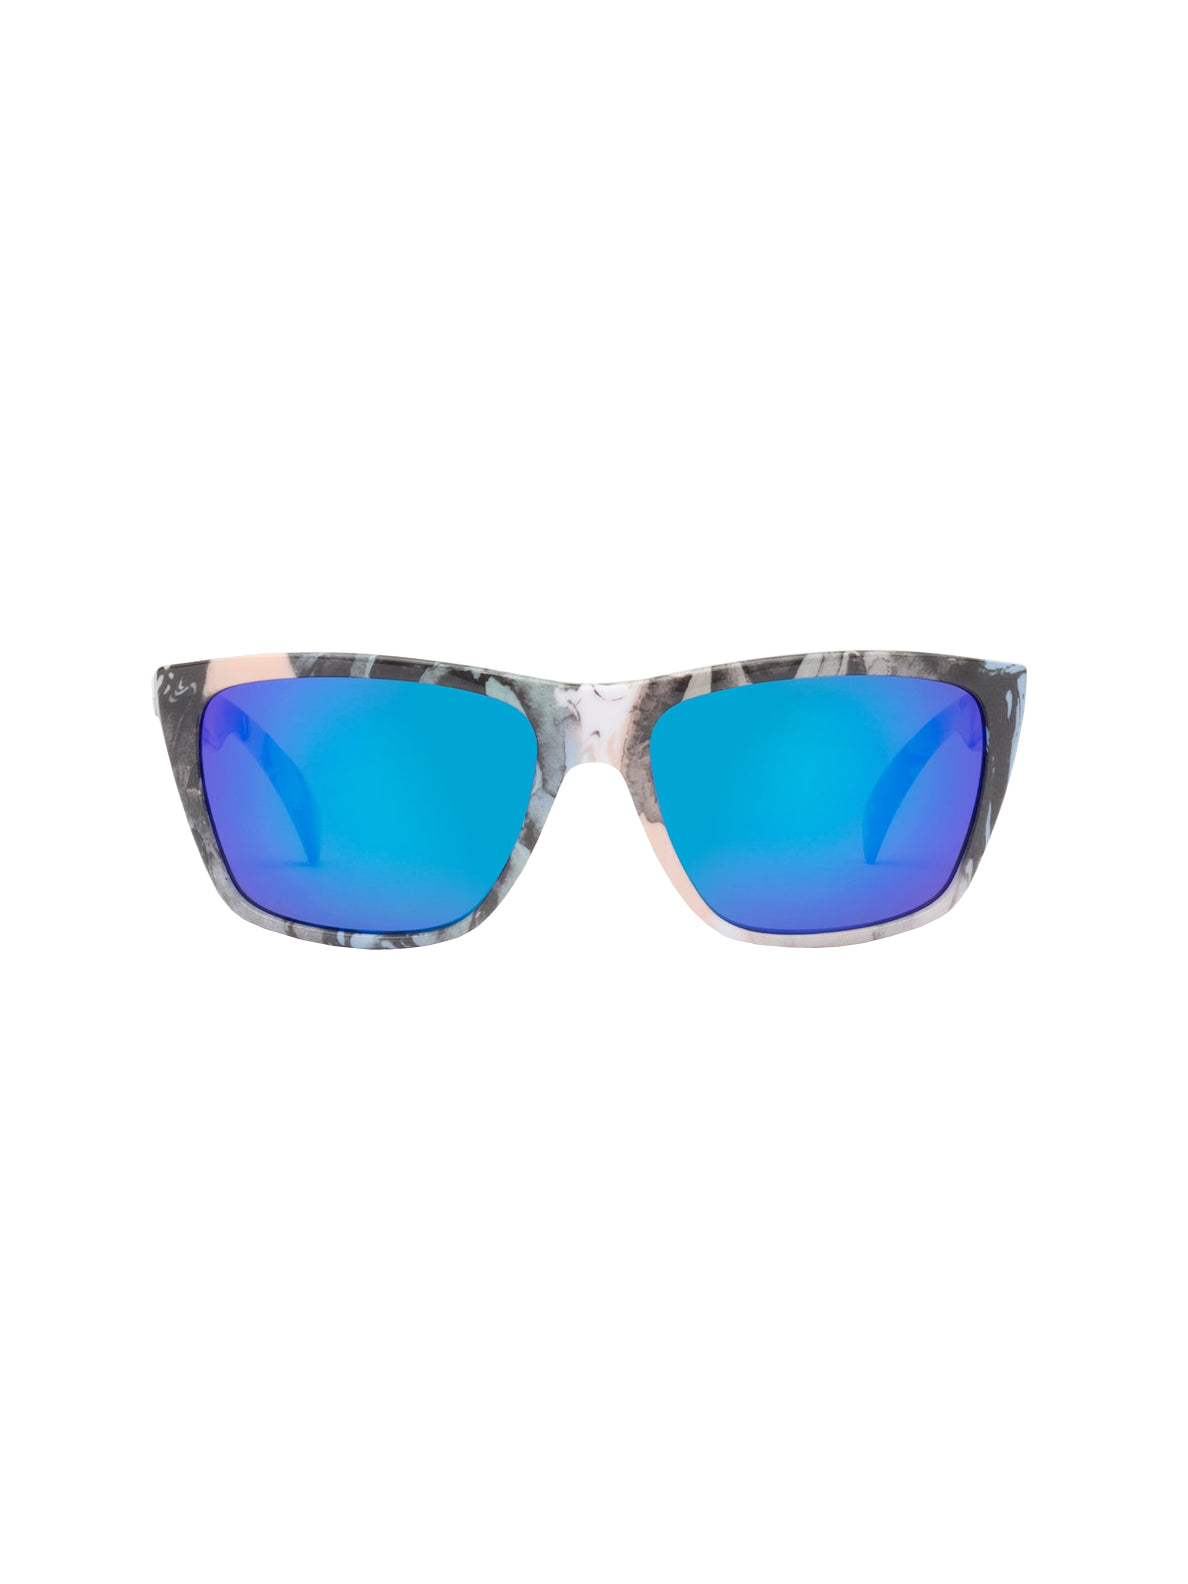 Volcom Plasm Sunglasses Skulls BlueMirror